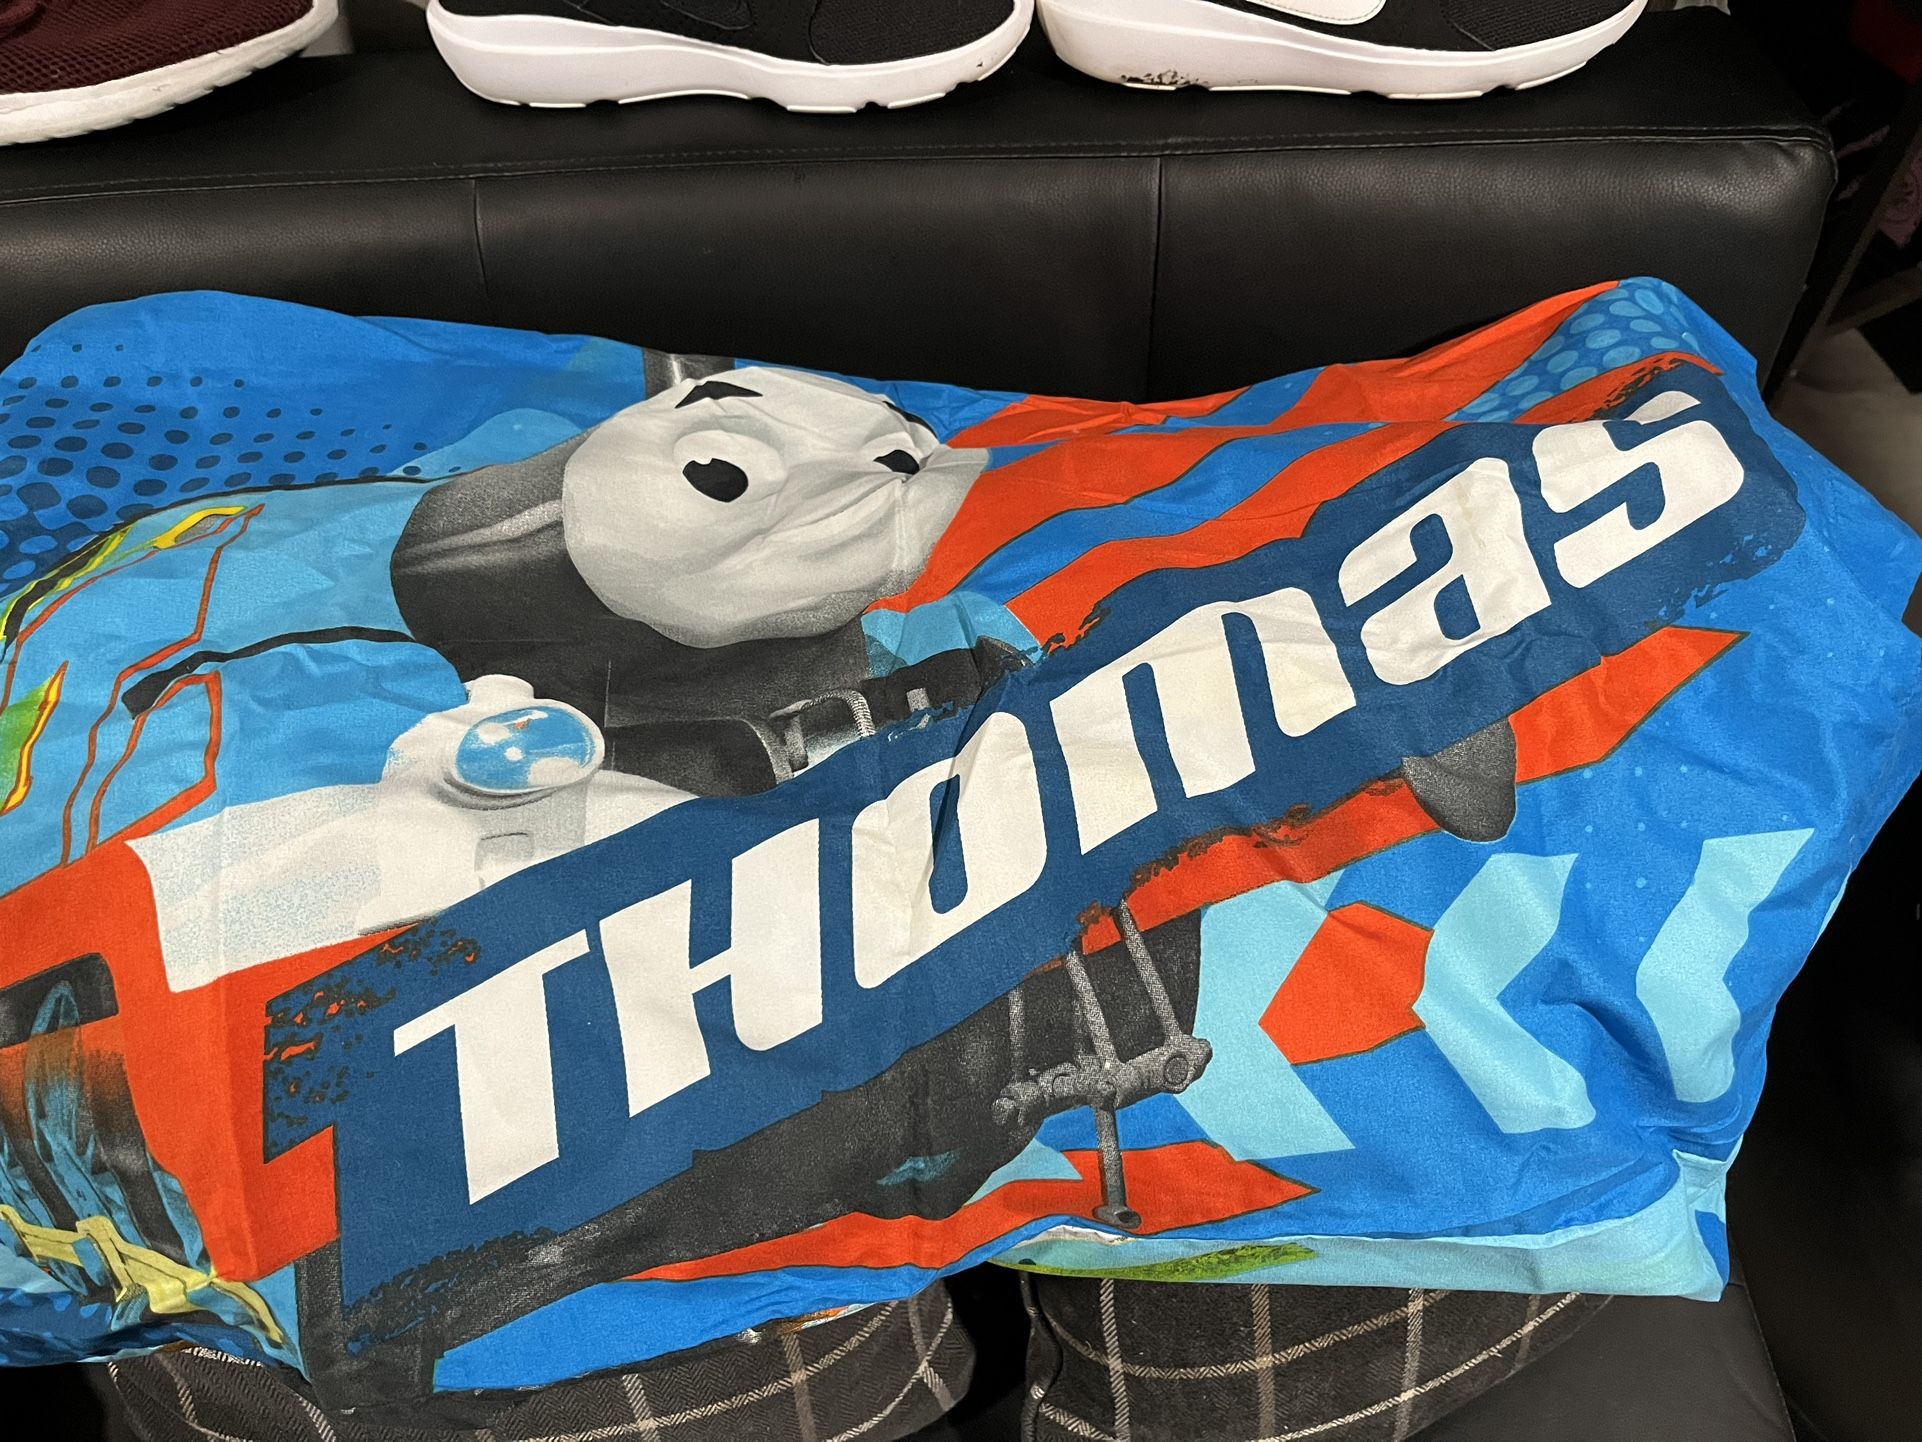 Thomas Bed set - $10